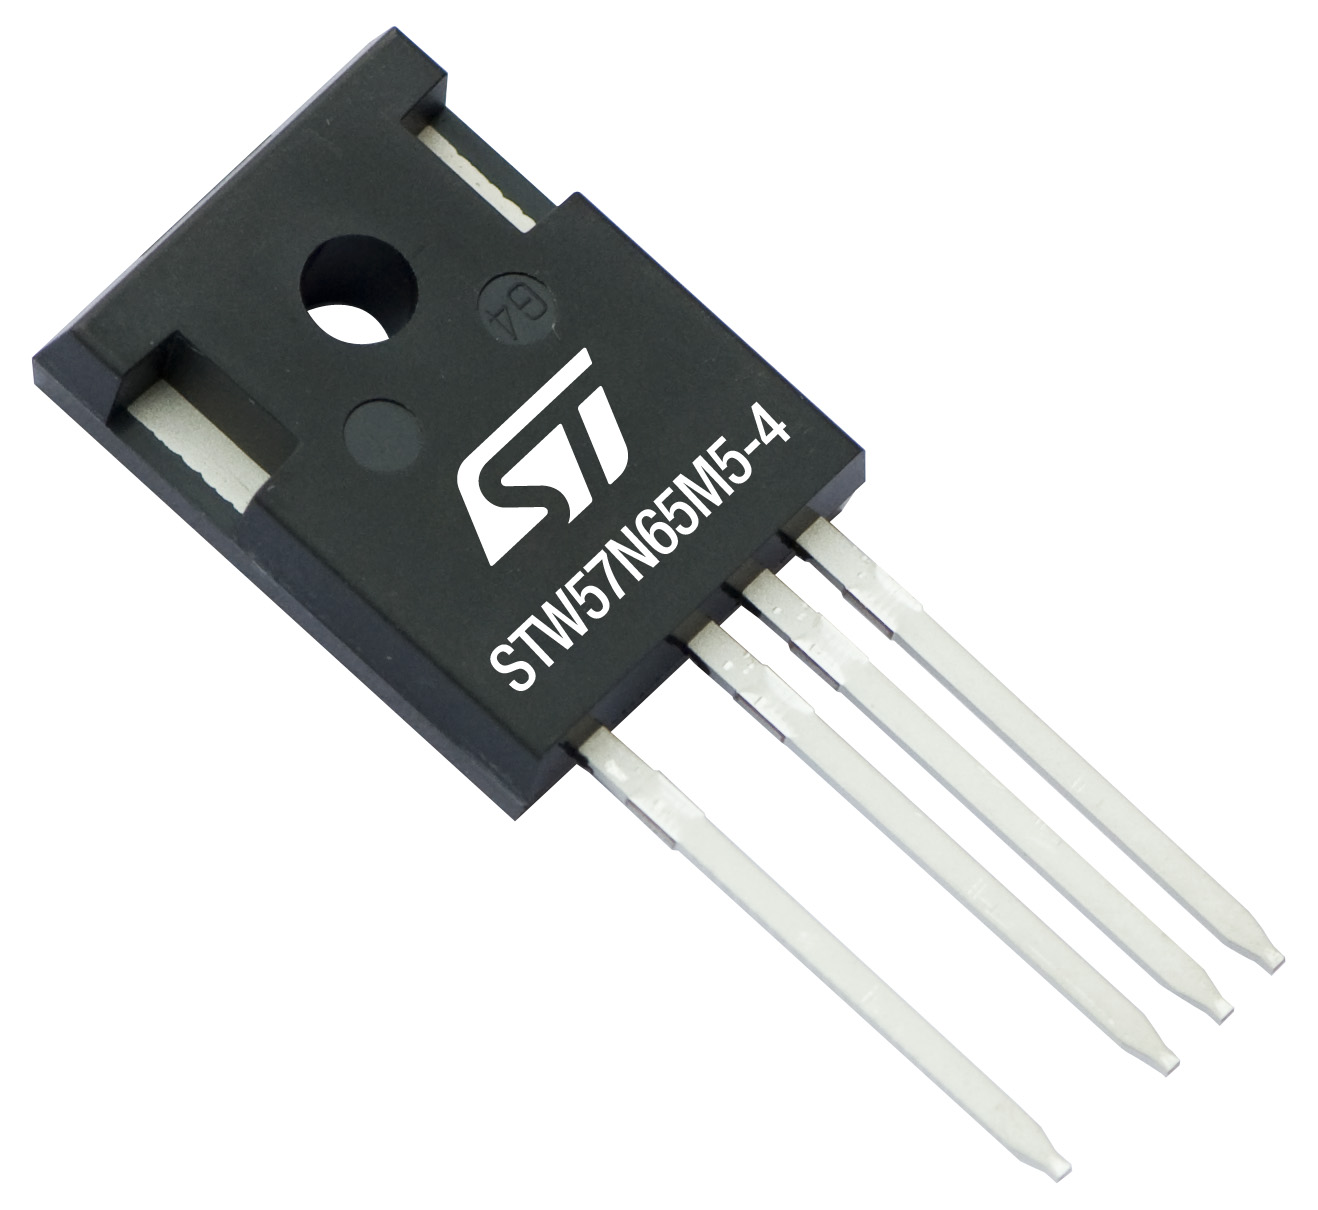 Energy-saving 4-pin package enhances MOSFET performance